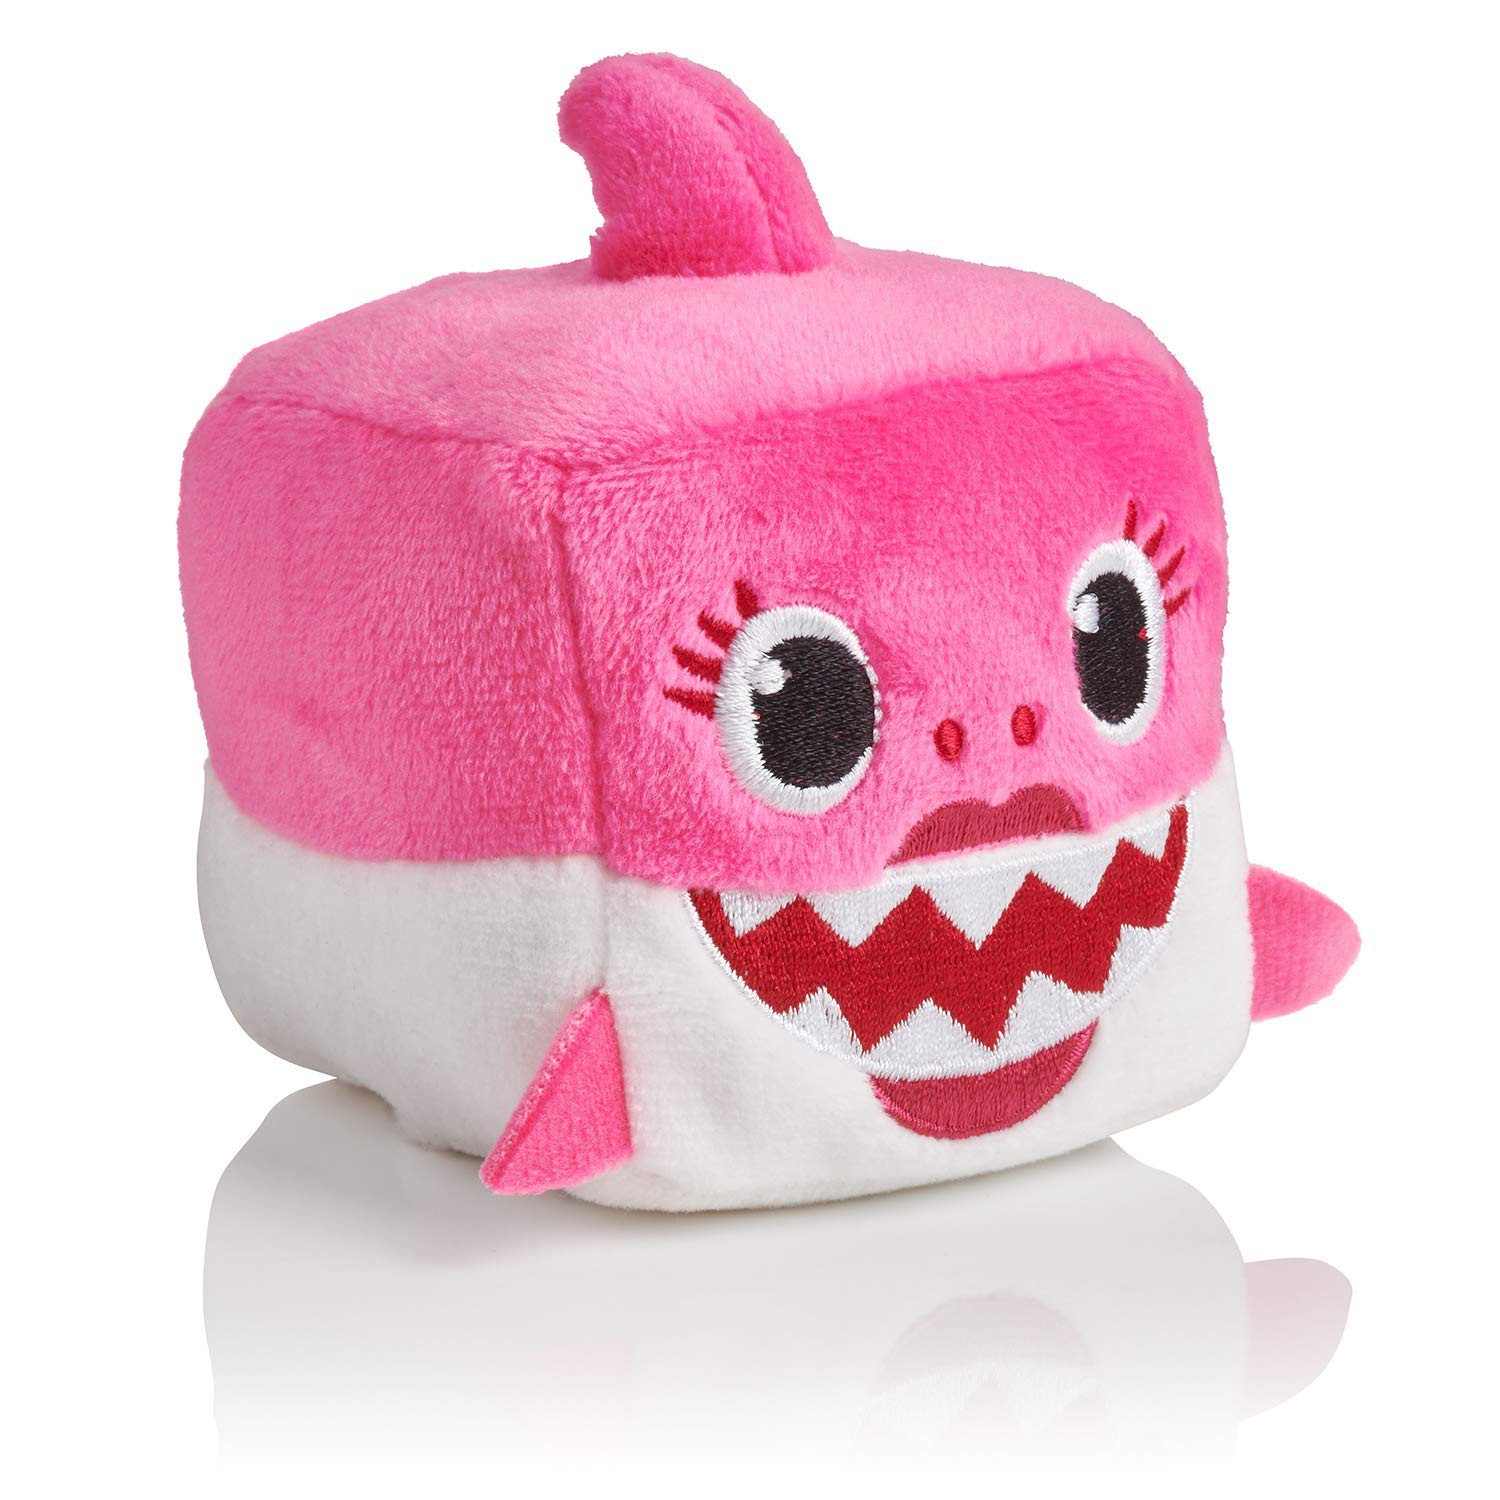 pinkfong baby shark plush